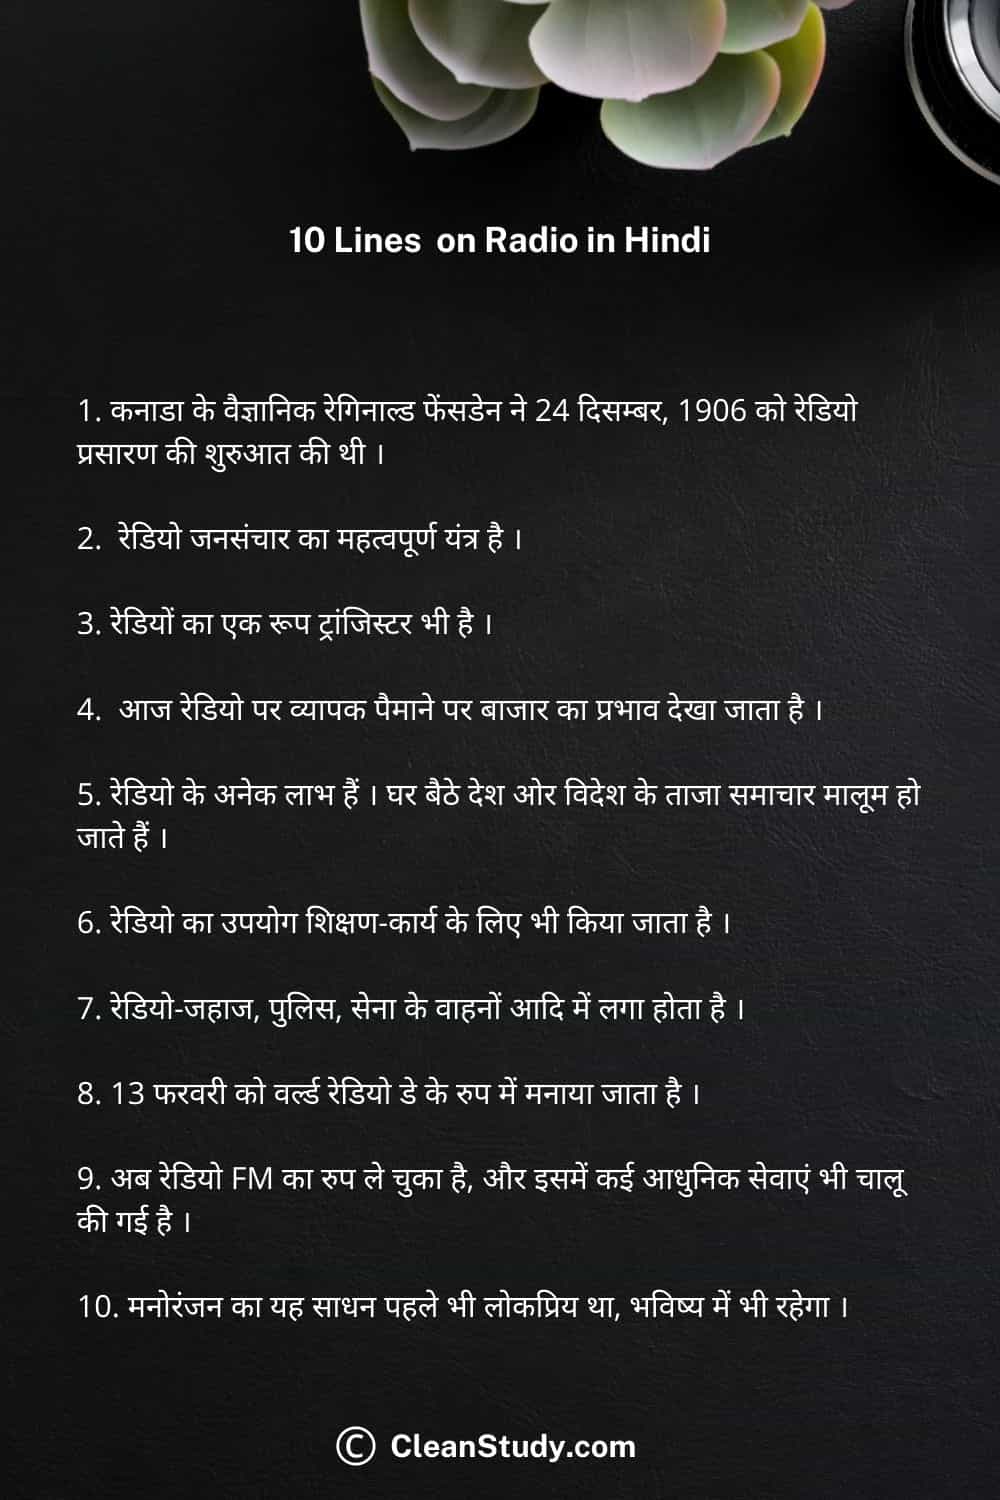 10 Lines on radio in hindi